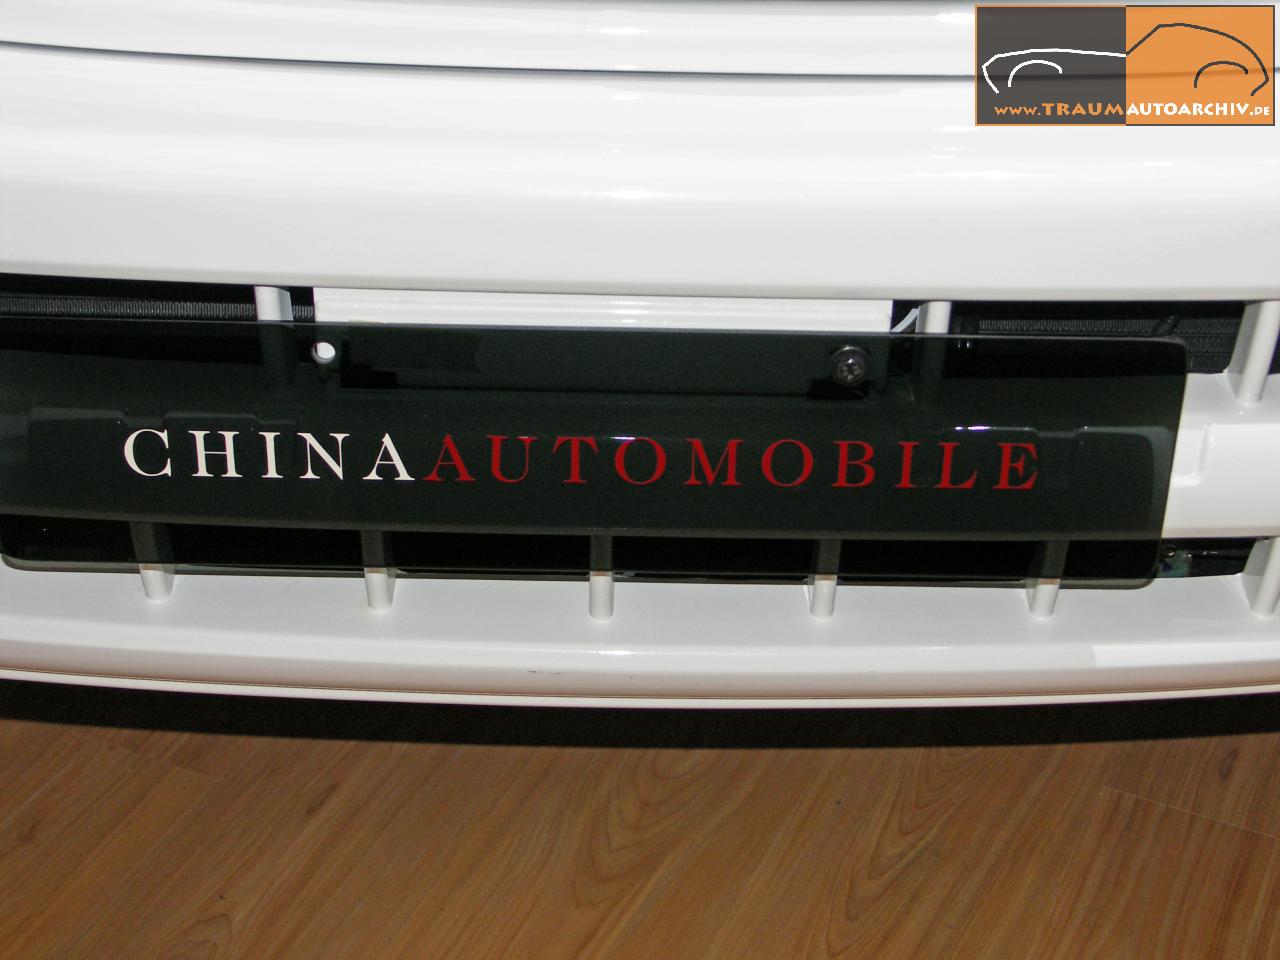 China-Automobile '2007.jpg 96.9K